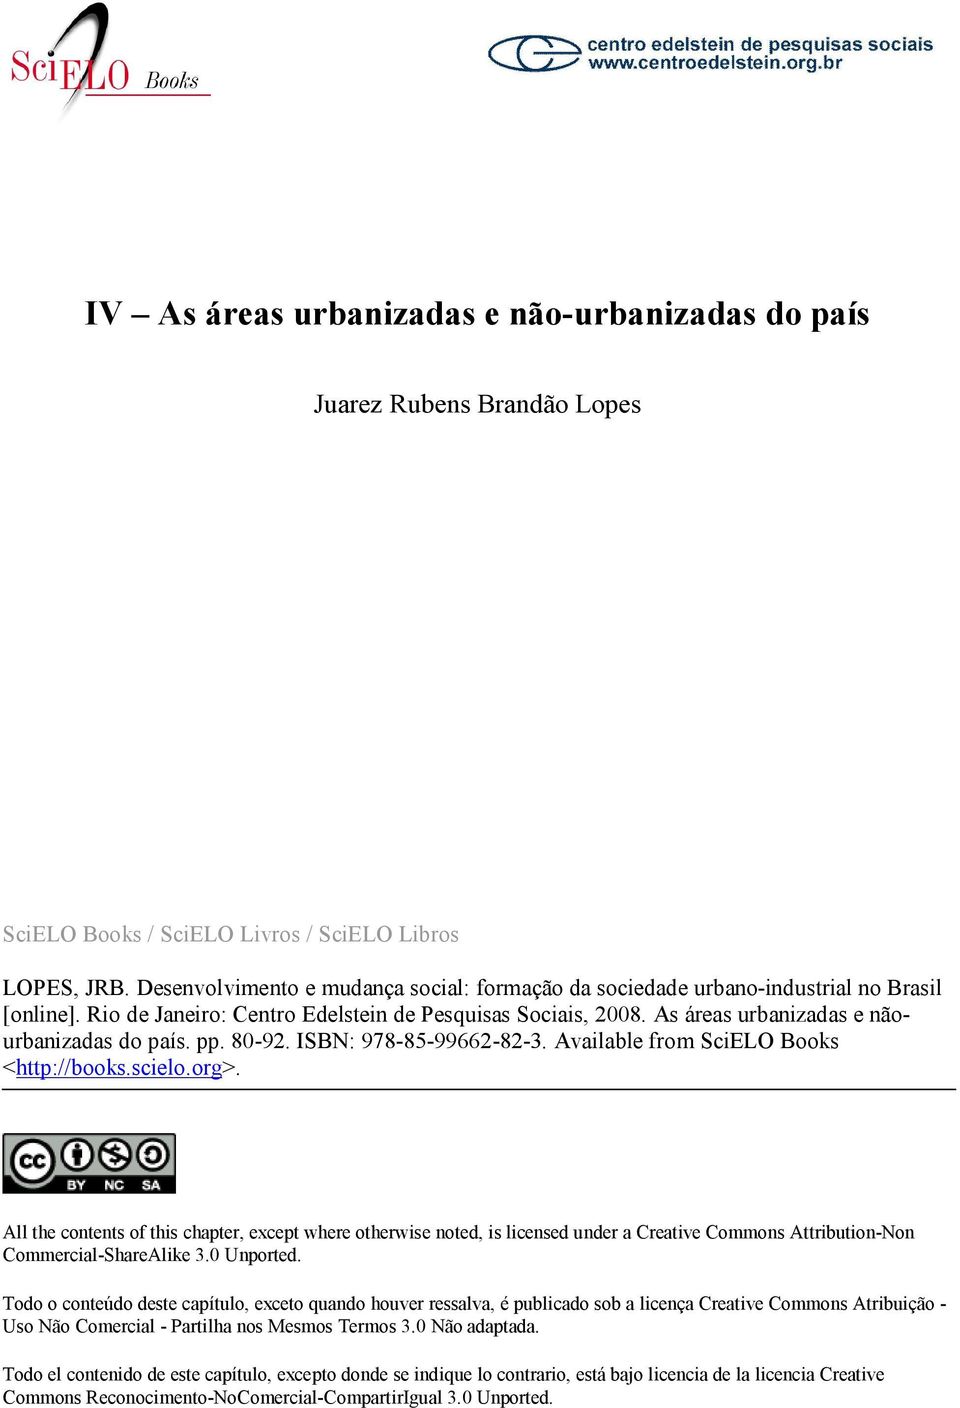 As áreas urbanizadas e nãourbanizadas do país. pp. 80-92. ISBN: 978-85-99662-82-3. Available from SciELO Books <http://books.scielo.org>.